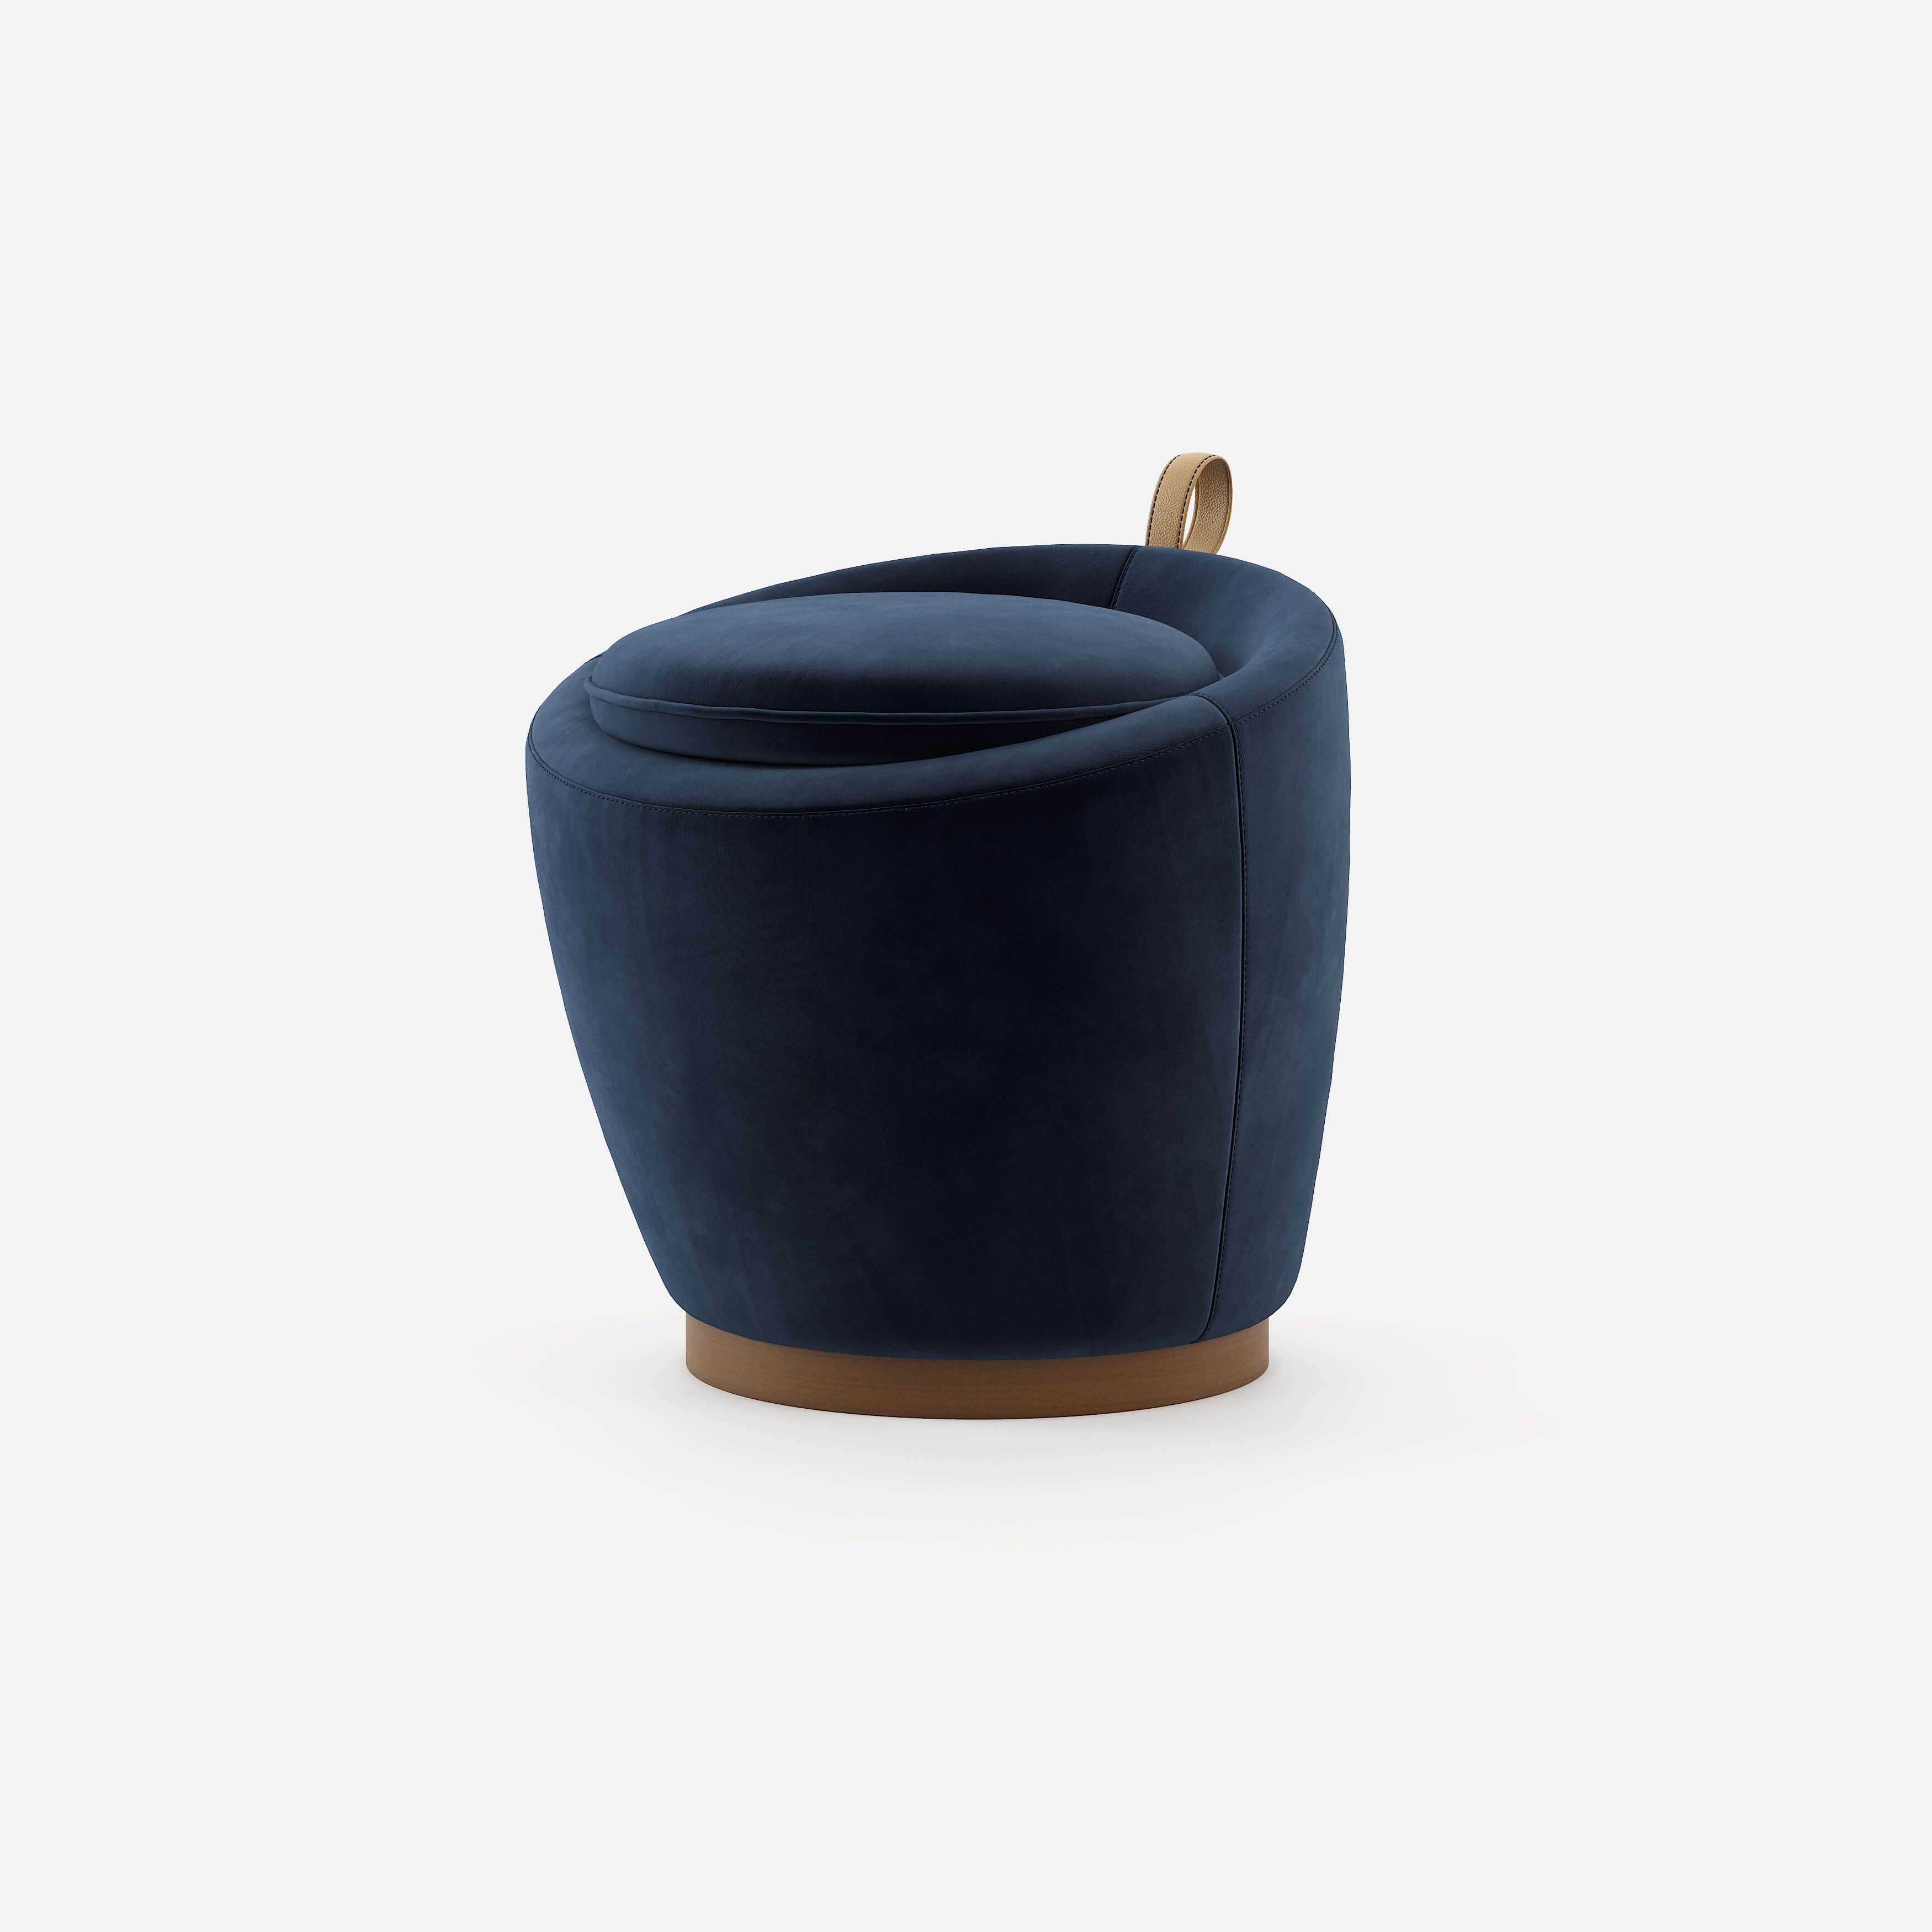 liz-pouf-seating-piece-deep-blue-velvet-accessorize-your-interior-design-project-living-room-walnut-wood-base-1